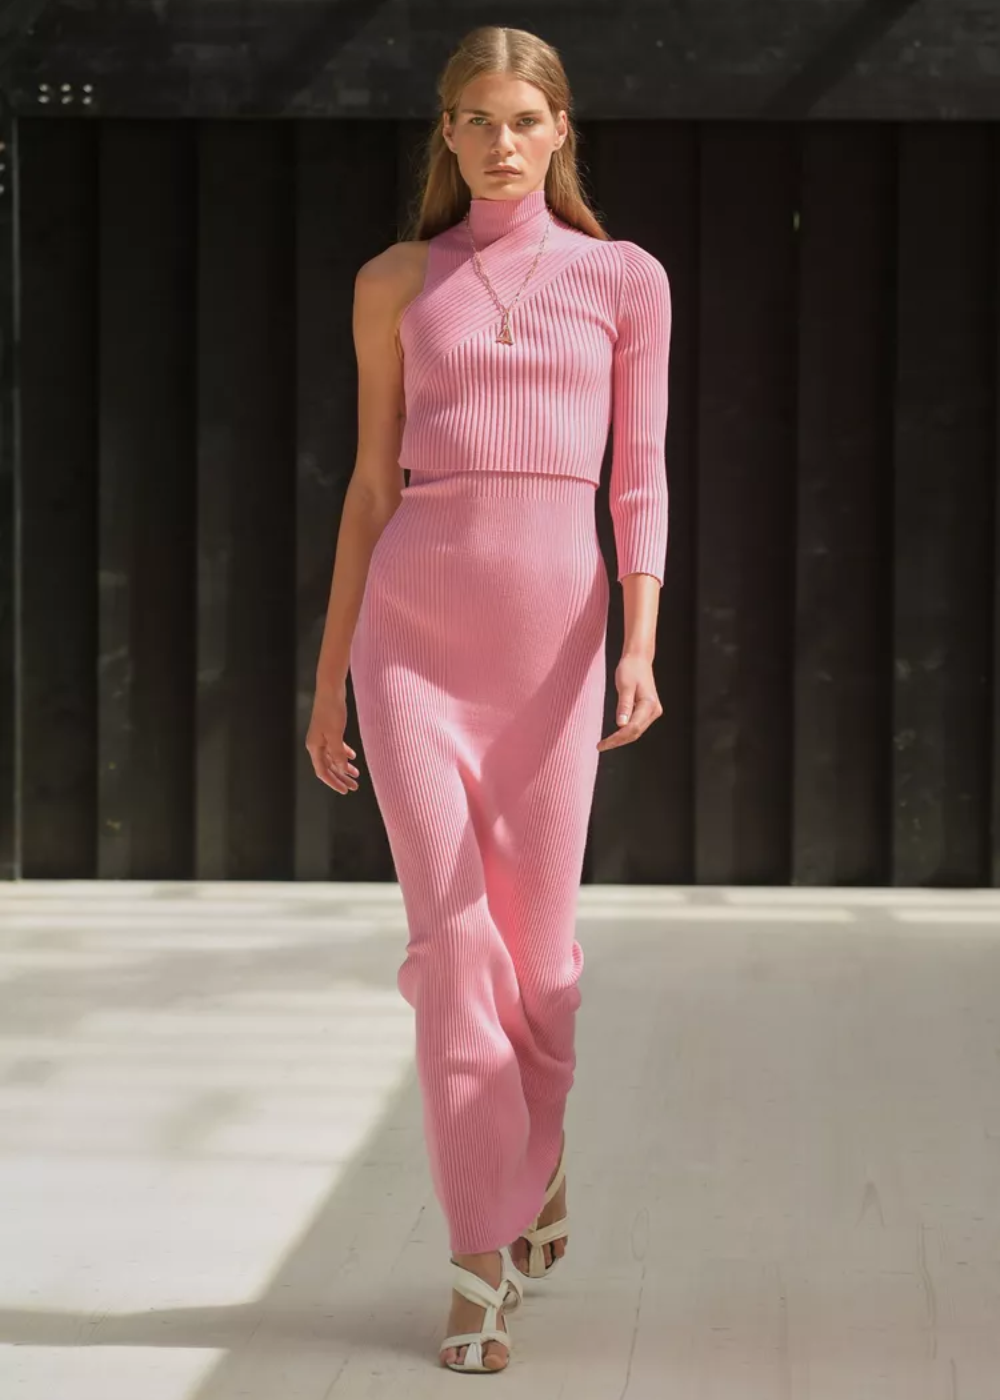 Aeron - vestido de tricô rosa de um ombro só - semana de moda de Copenhagen - Primavera - modelo andando pela passarela - https://stealthelook.com.br